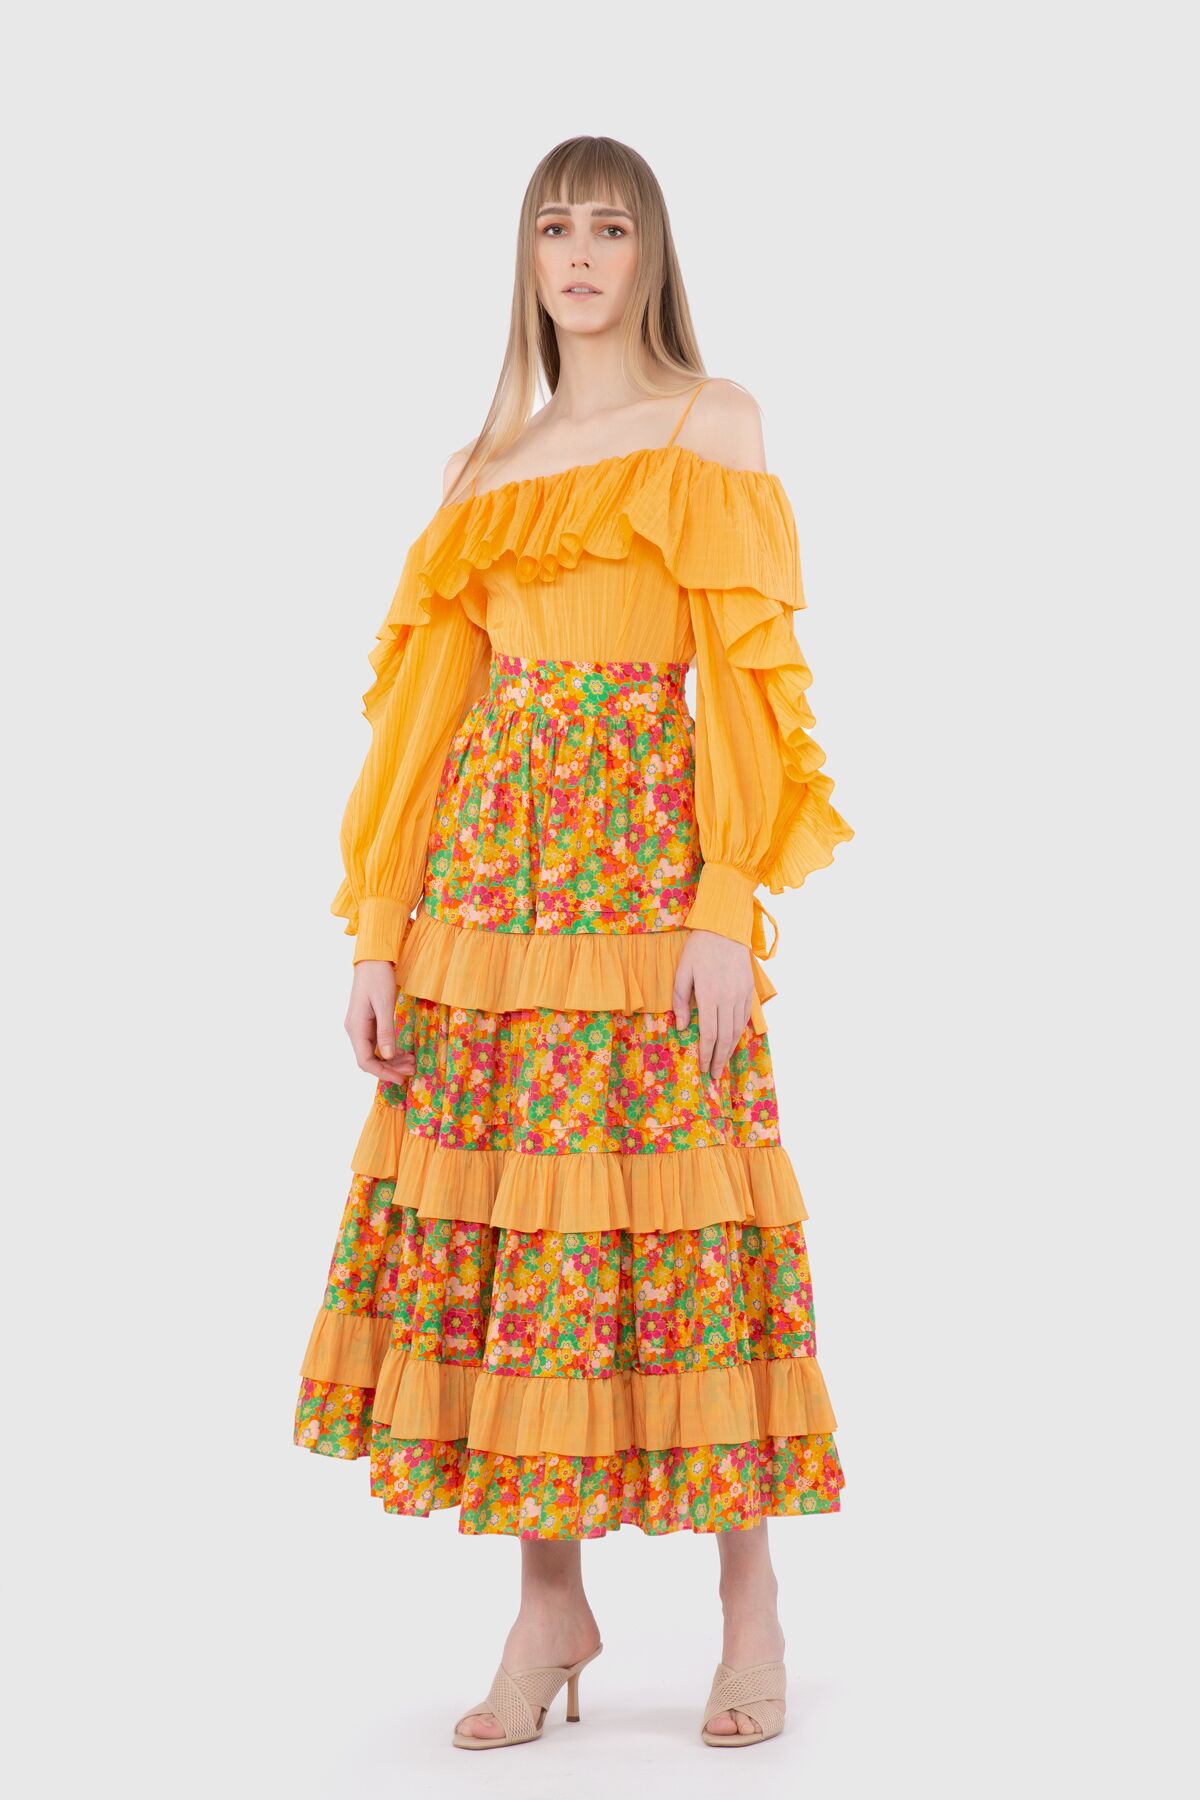  GIZIA - High Waist Crispy Patterned Contrast Fabric Long Orange Skirt